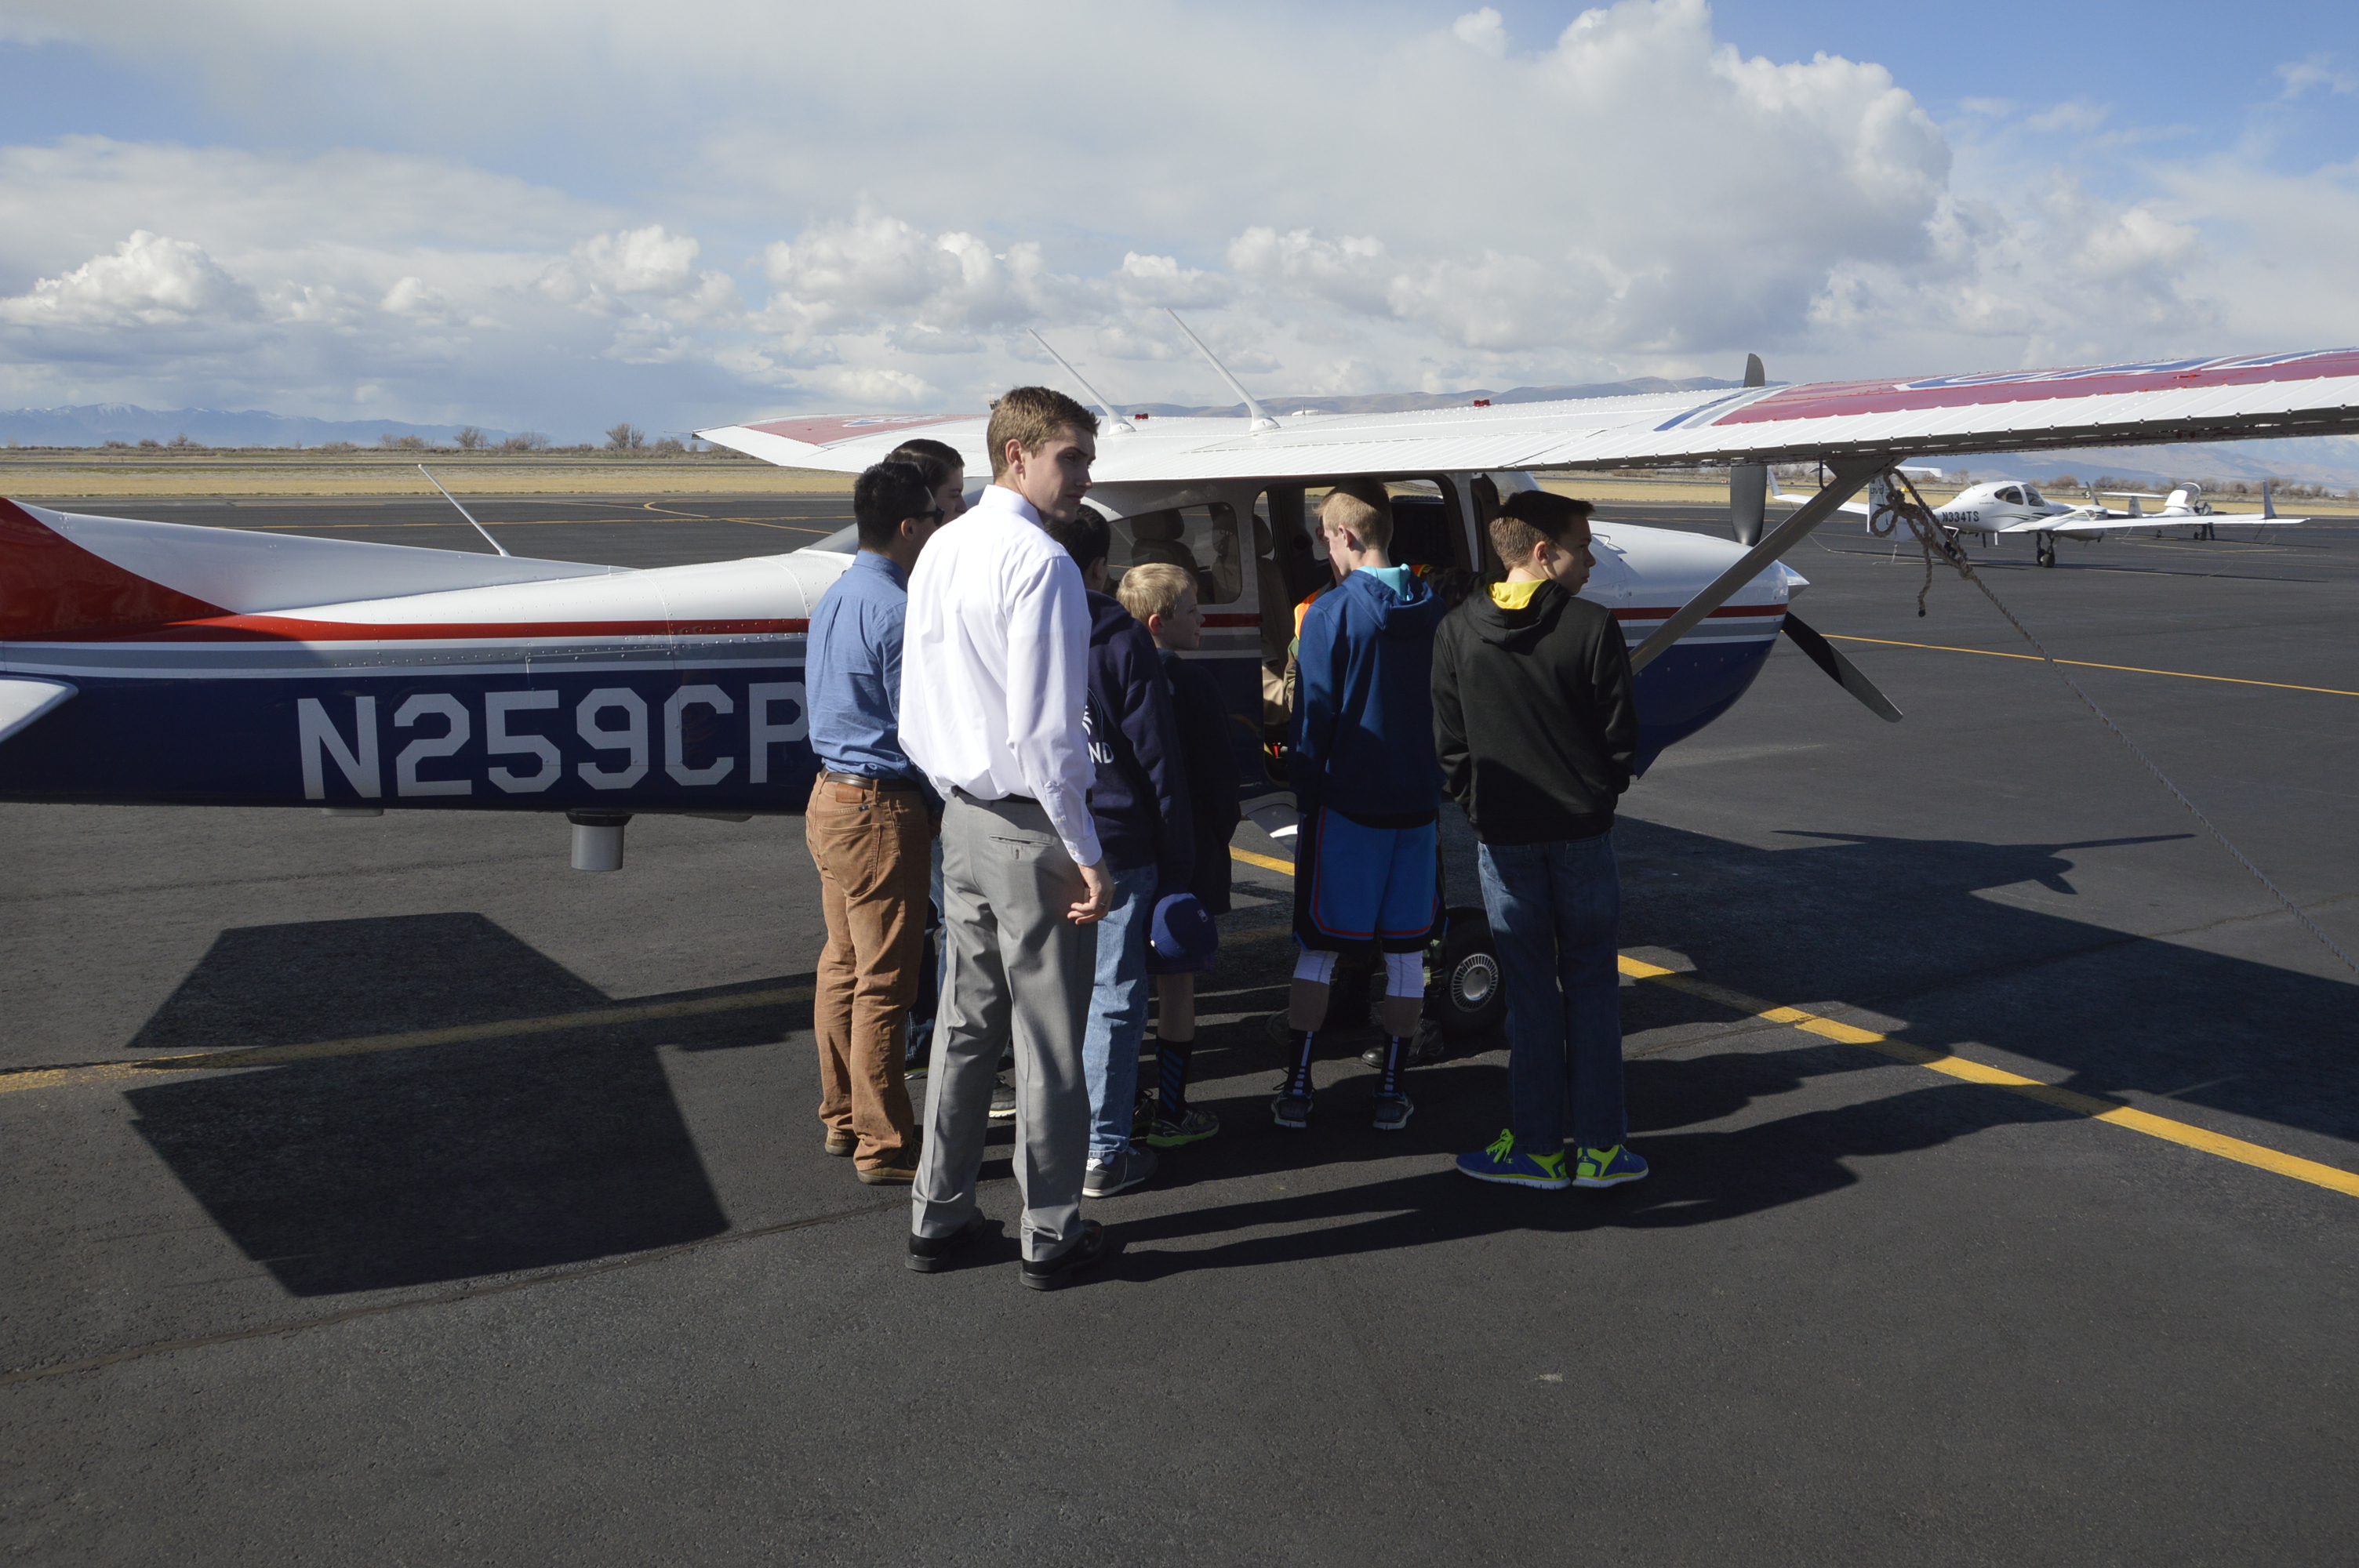 Teachers take flight to explore STEM aerospace opportunities